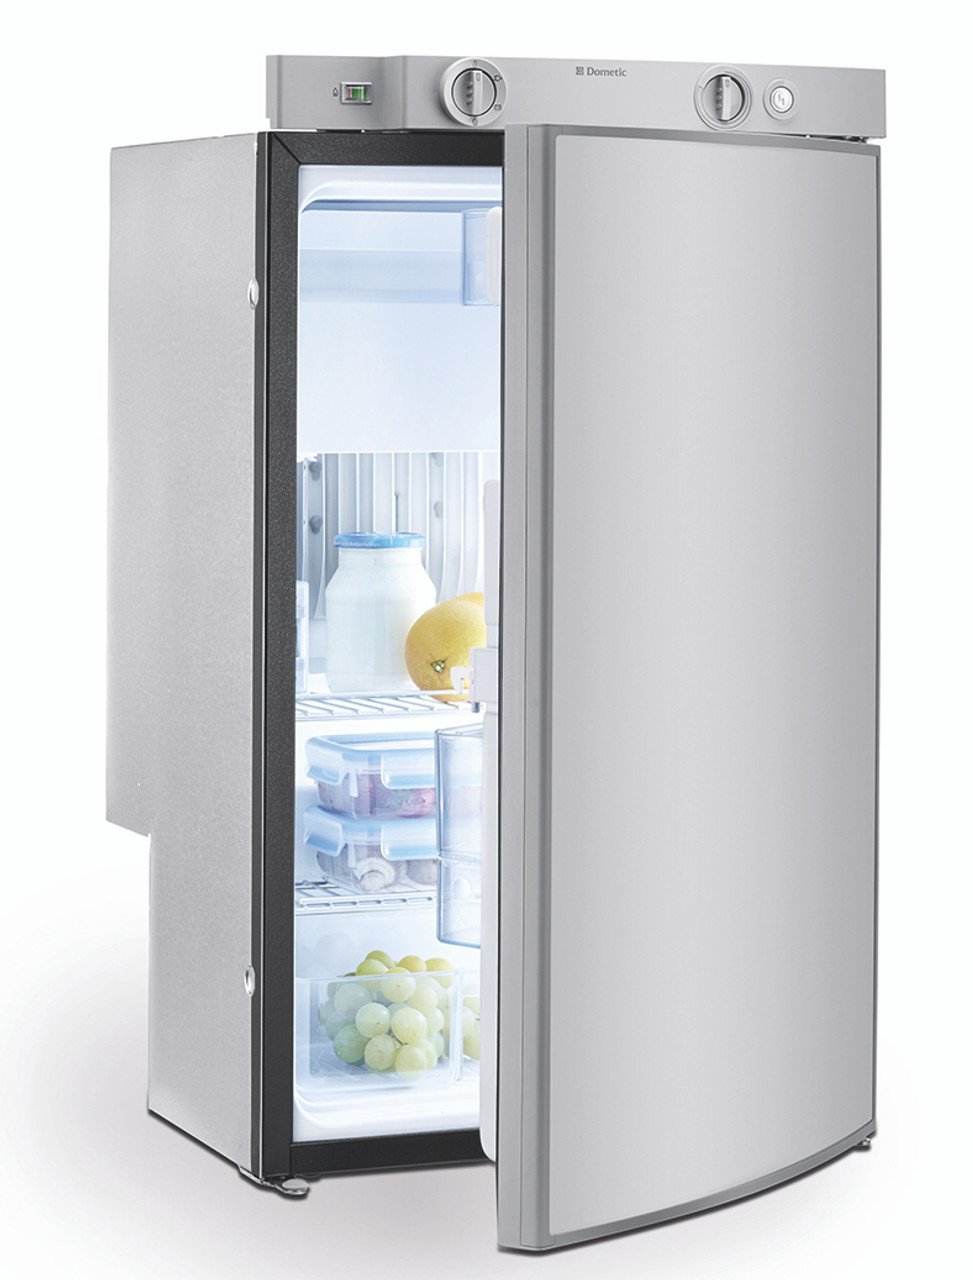 13++ Dometic fridge lights flashing ideas in 2021 